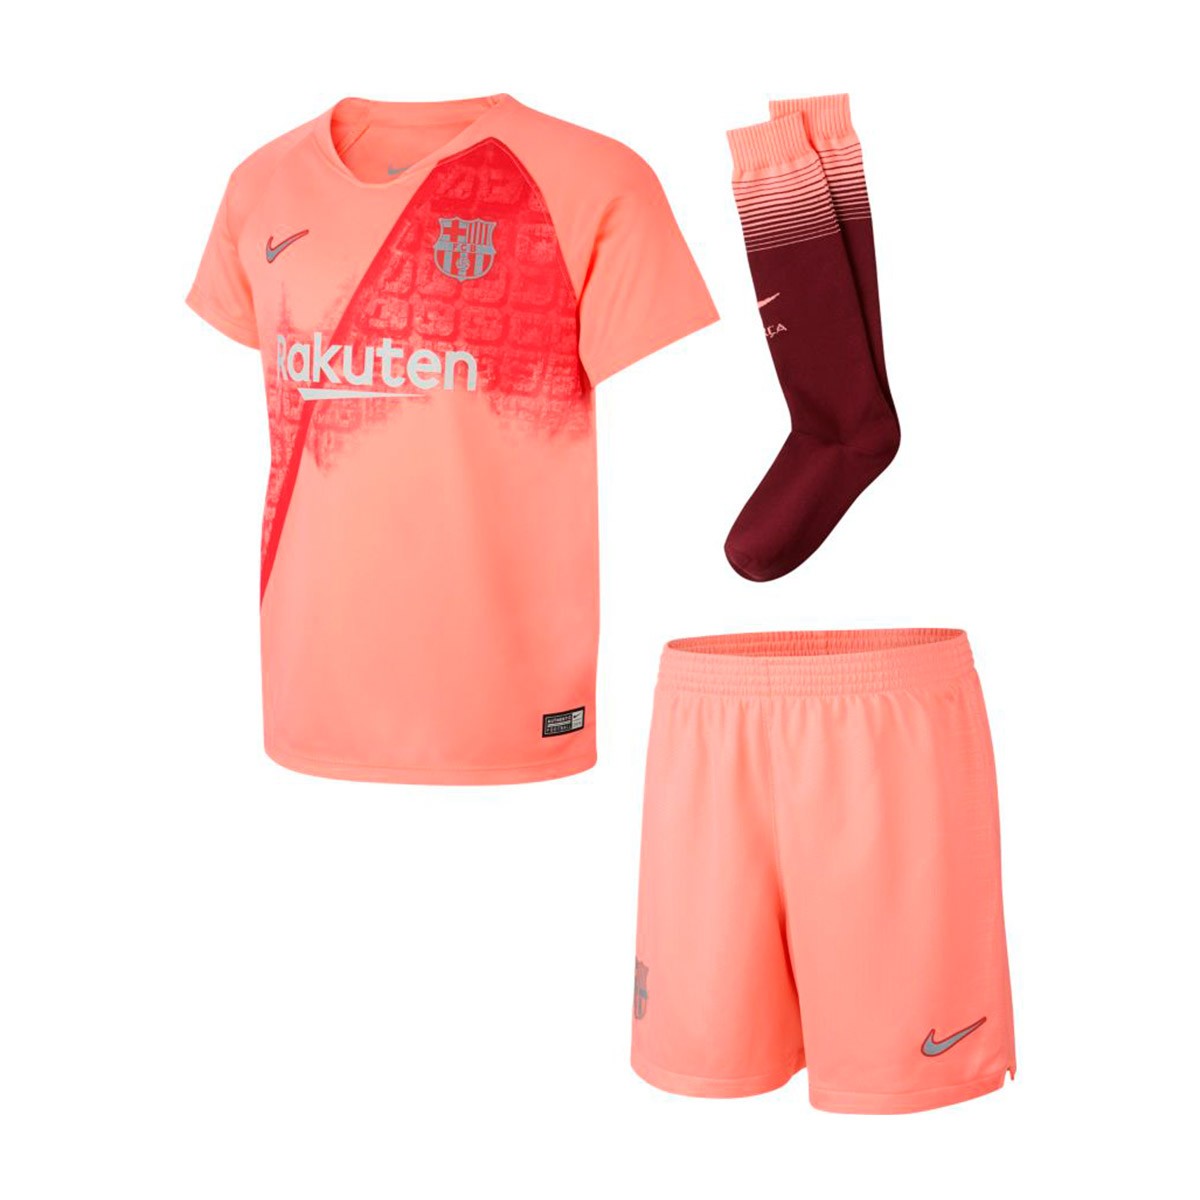 barcelona fc pink kit